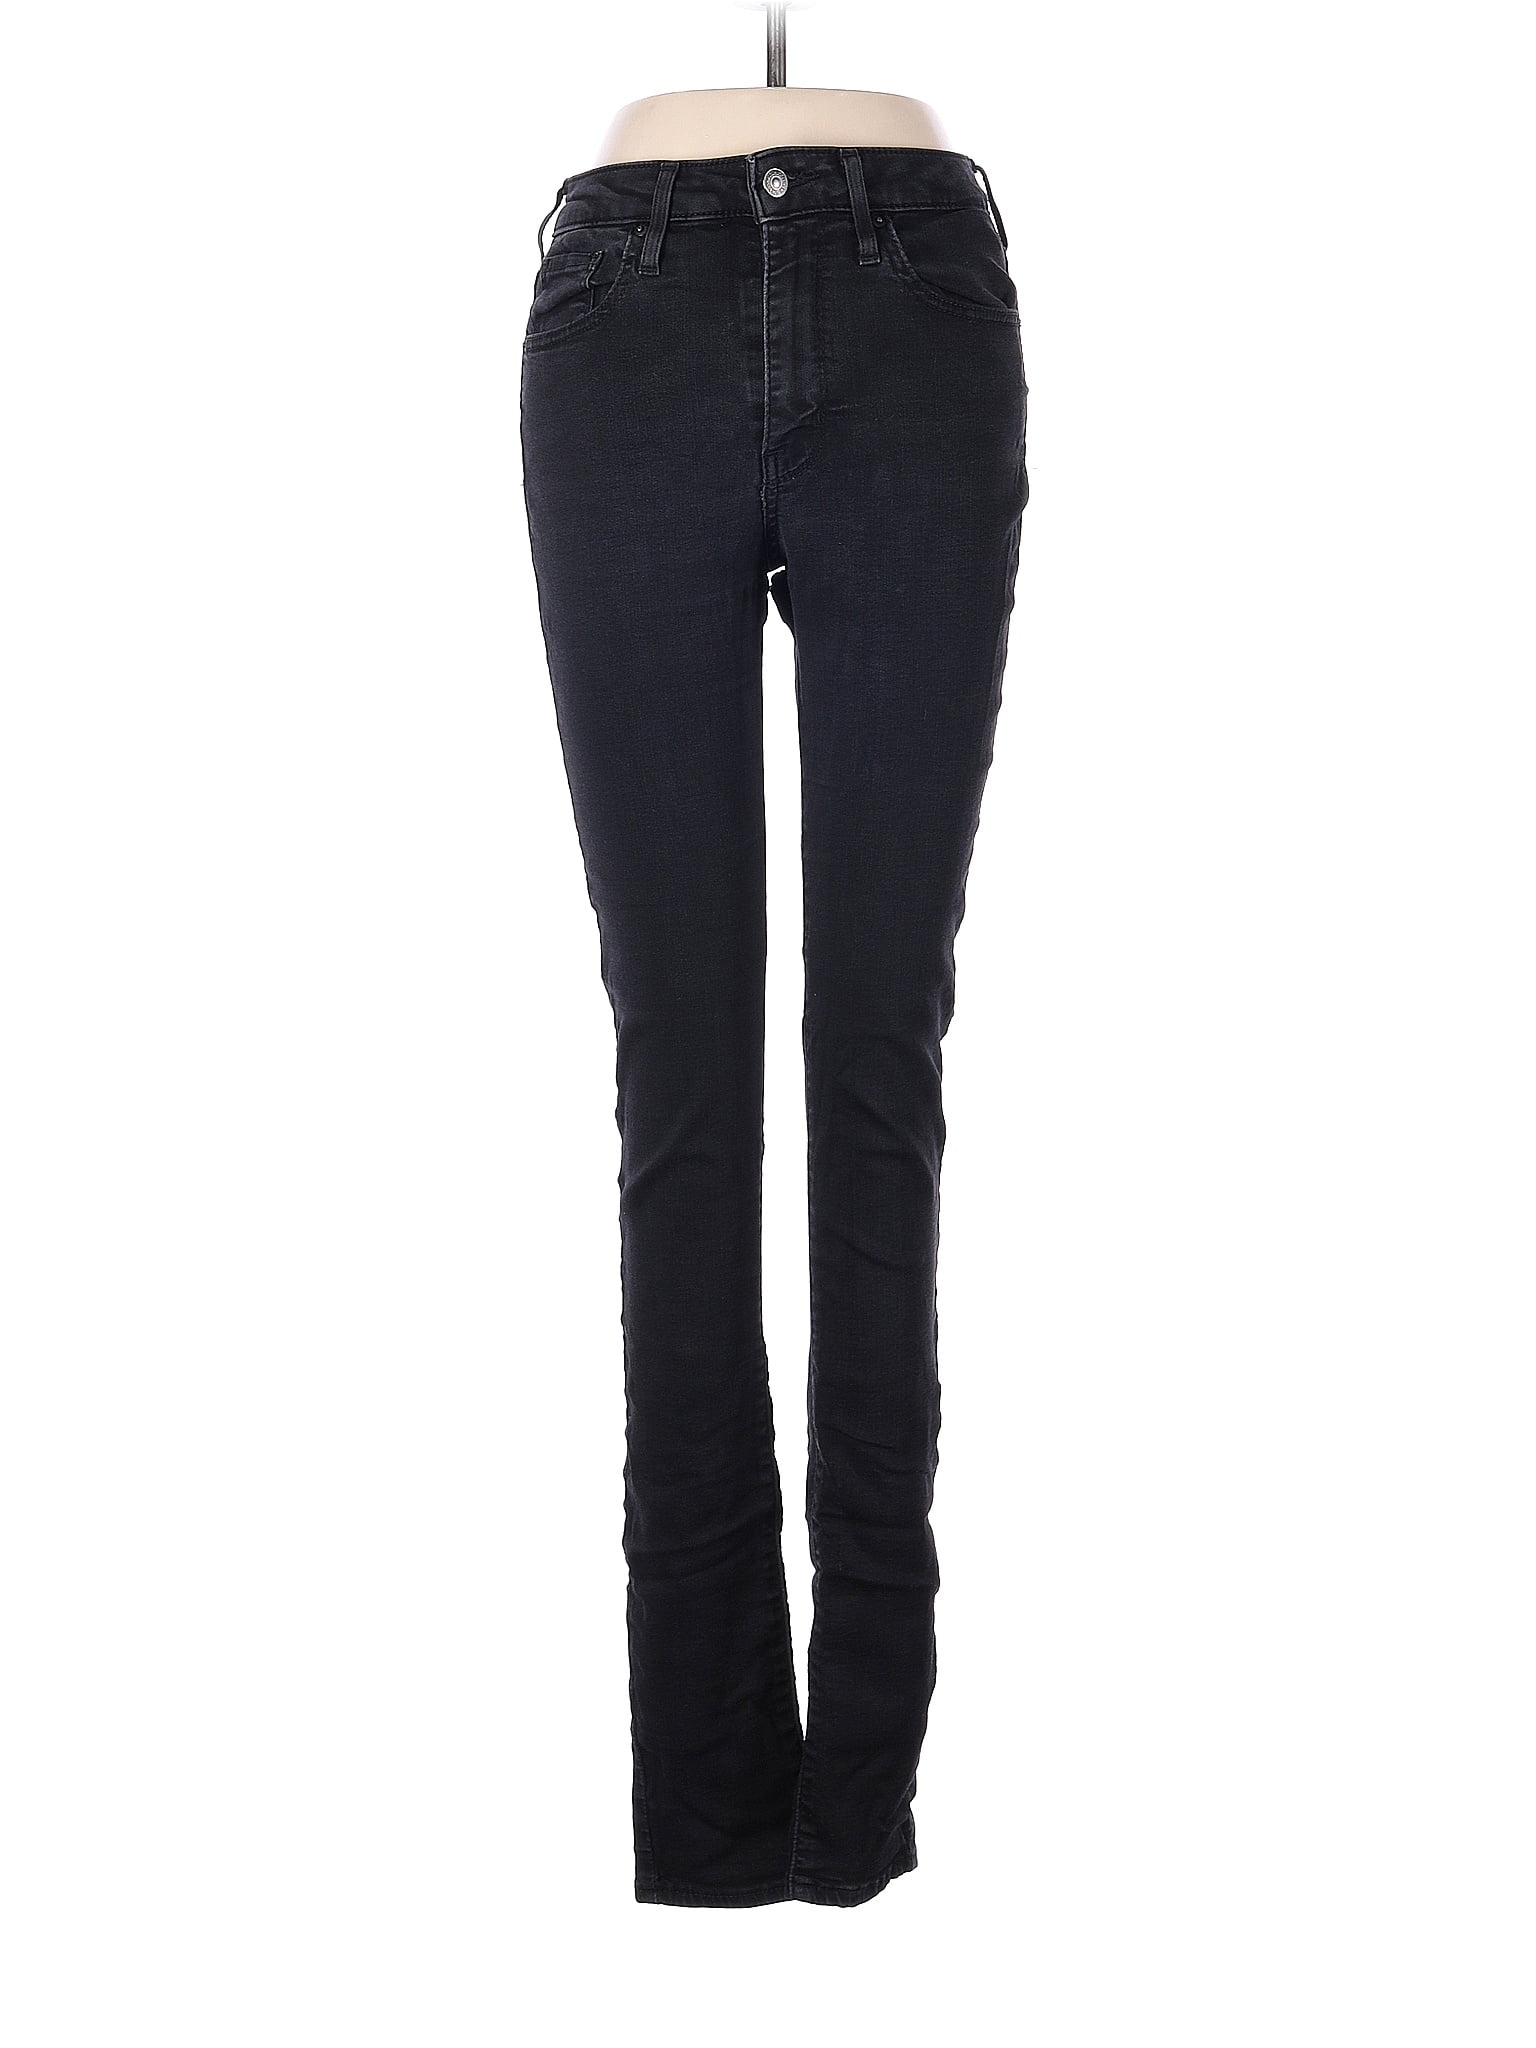 Levi's Black Jeans 28 Waist - 62% off | ThredUp